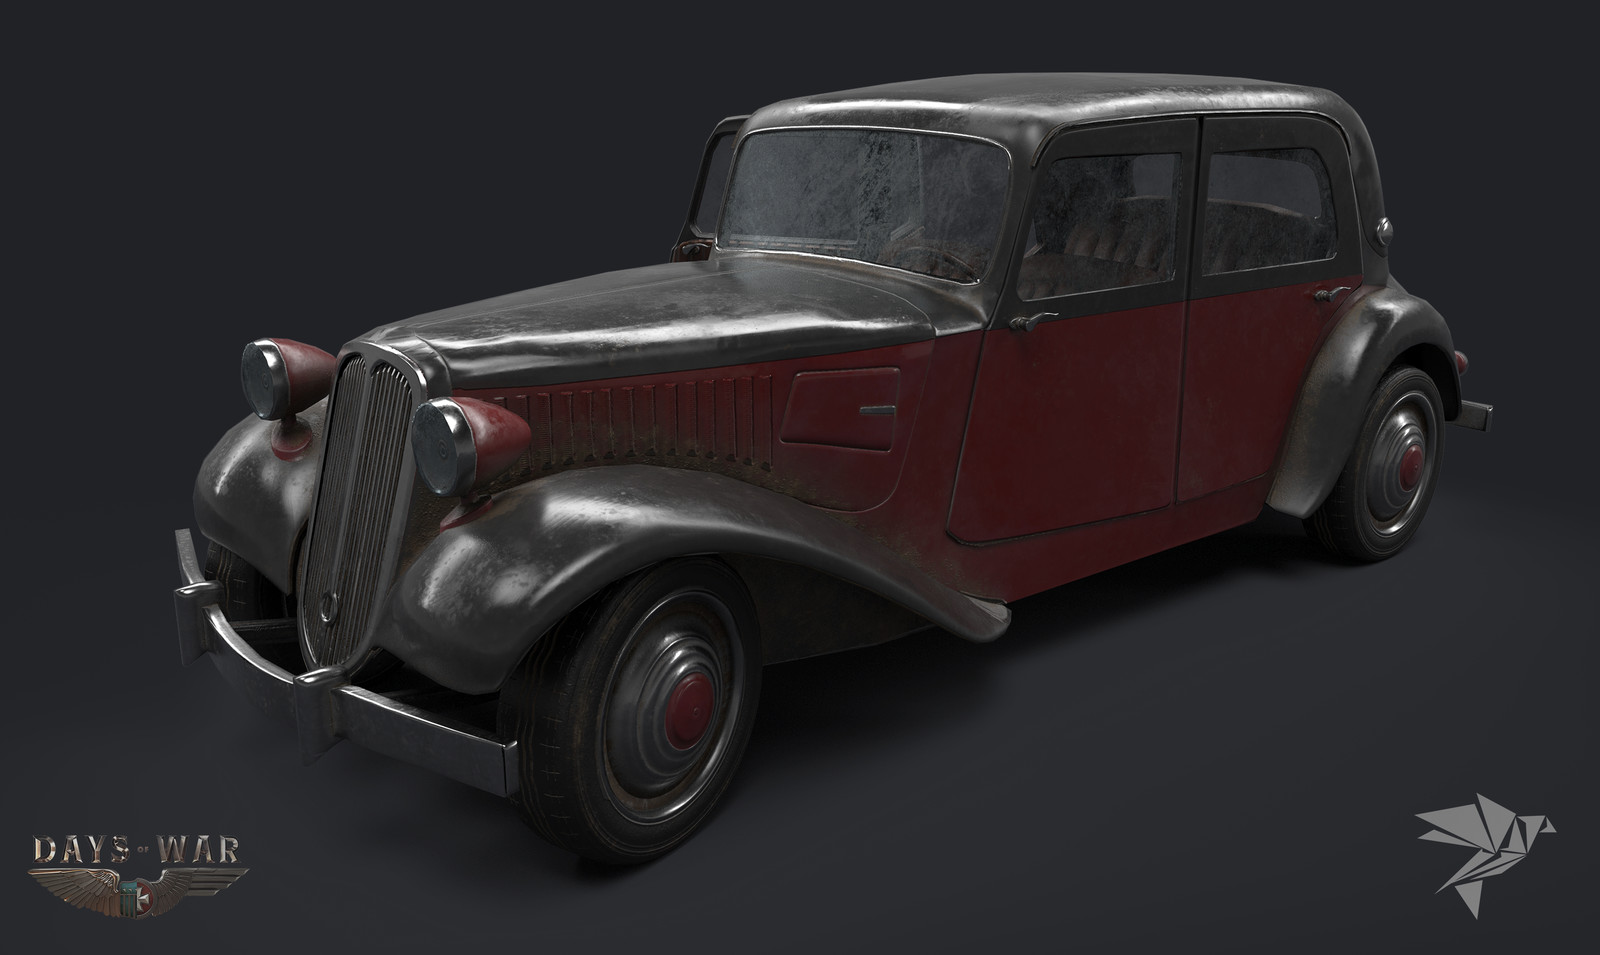 1936 Citroën Traction Avant - Days of war